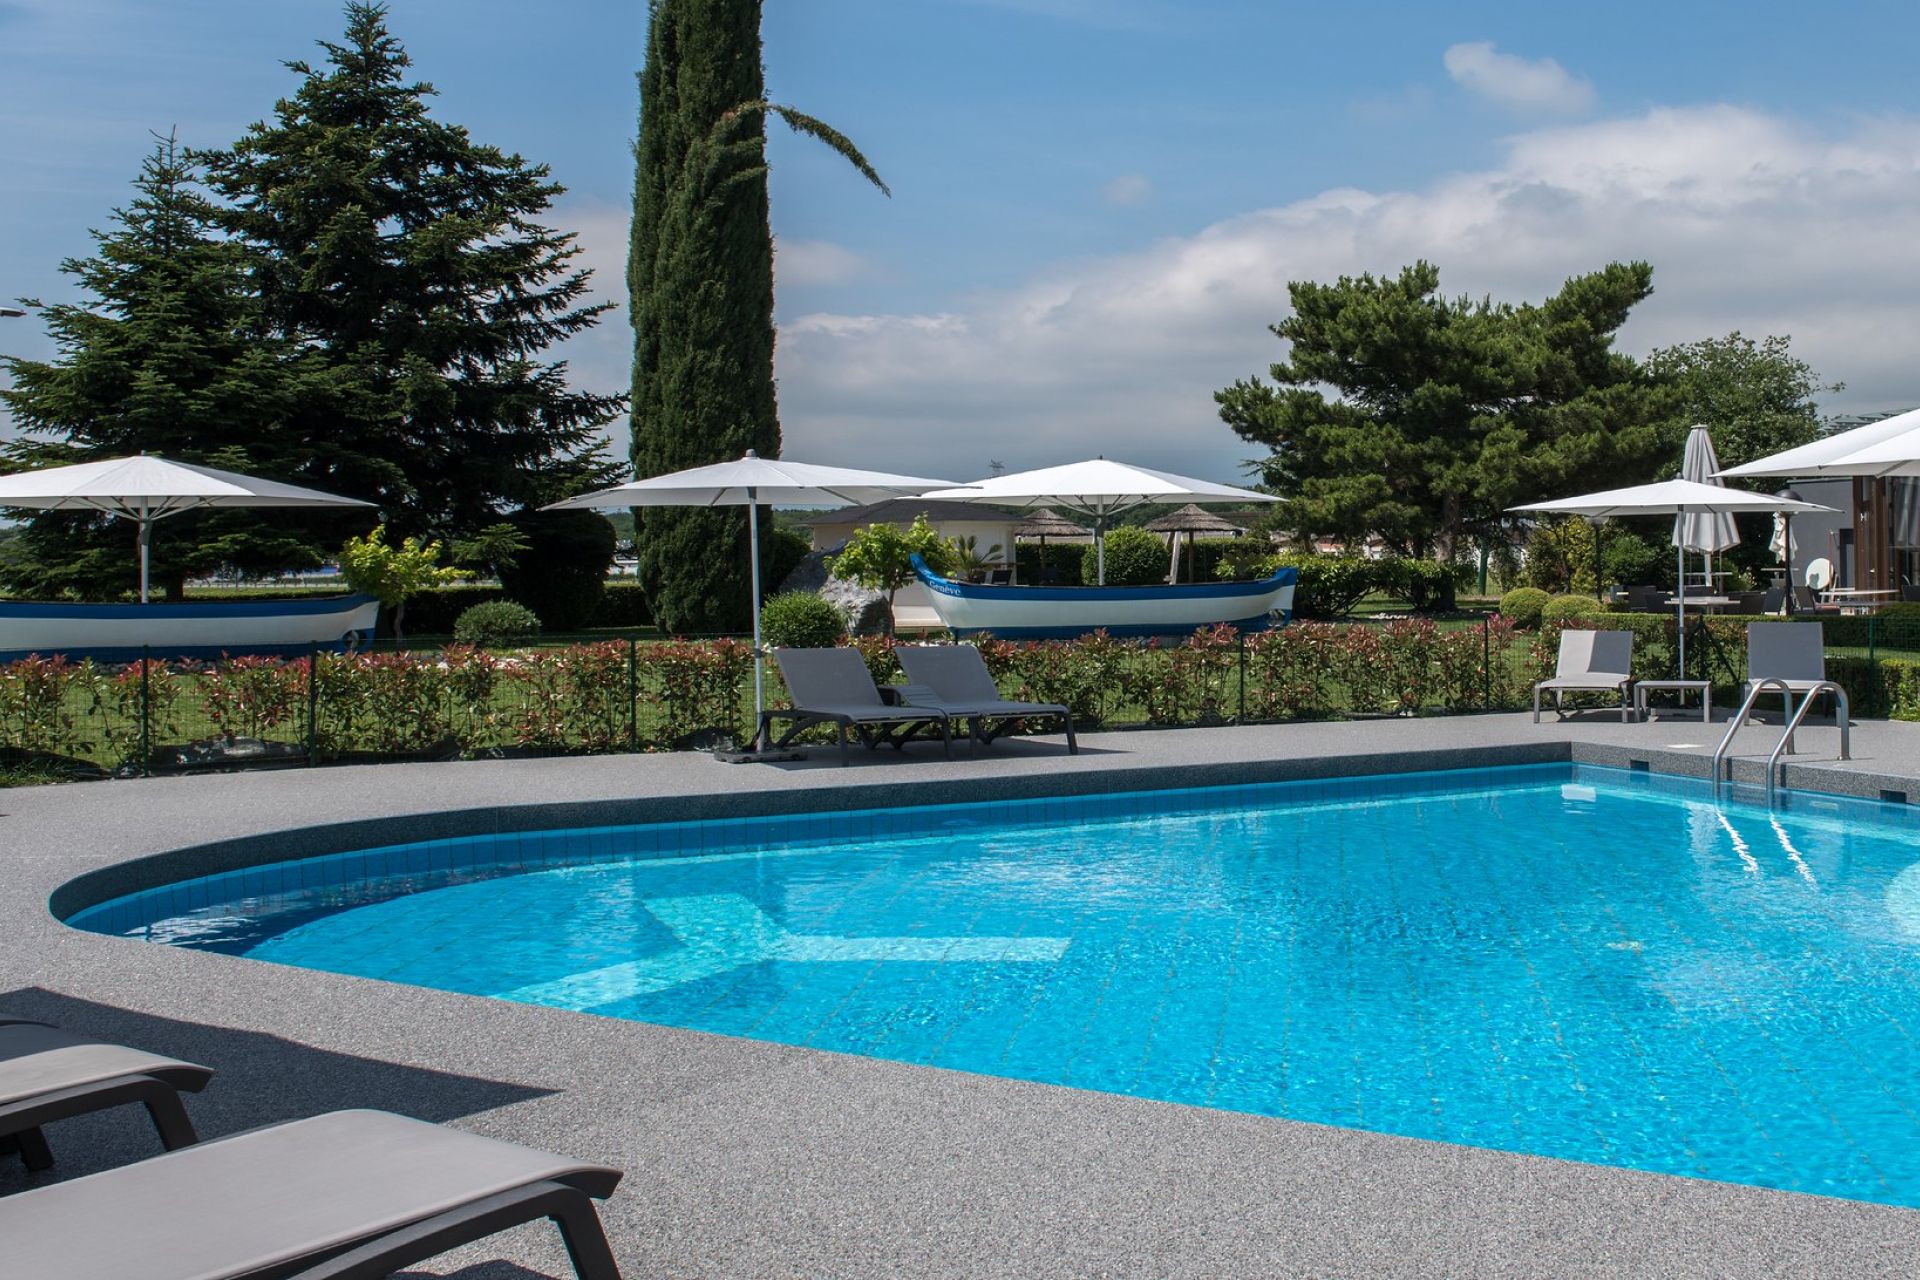 Everness hotel et resort piscine